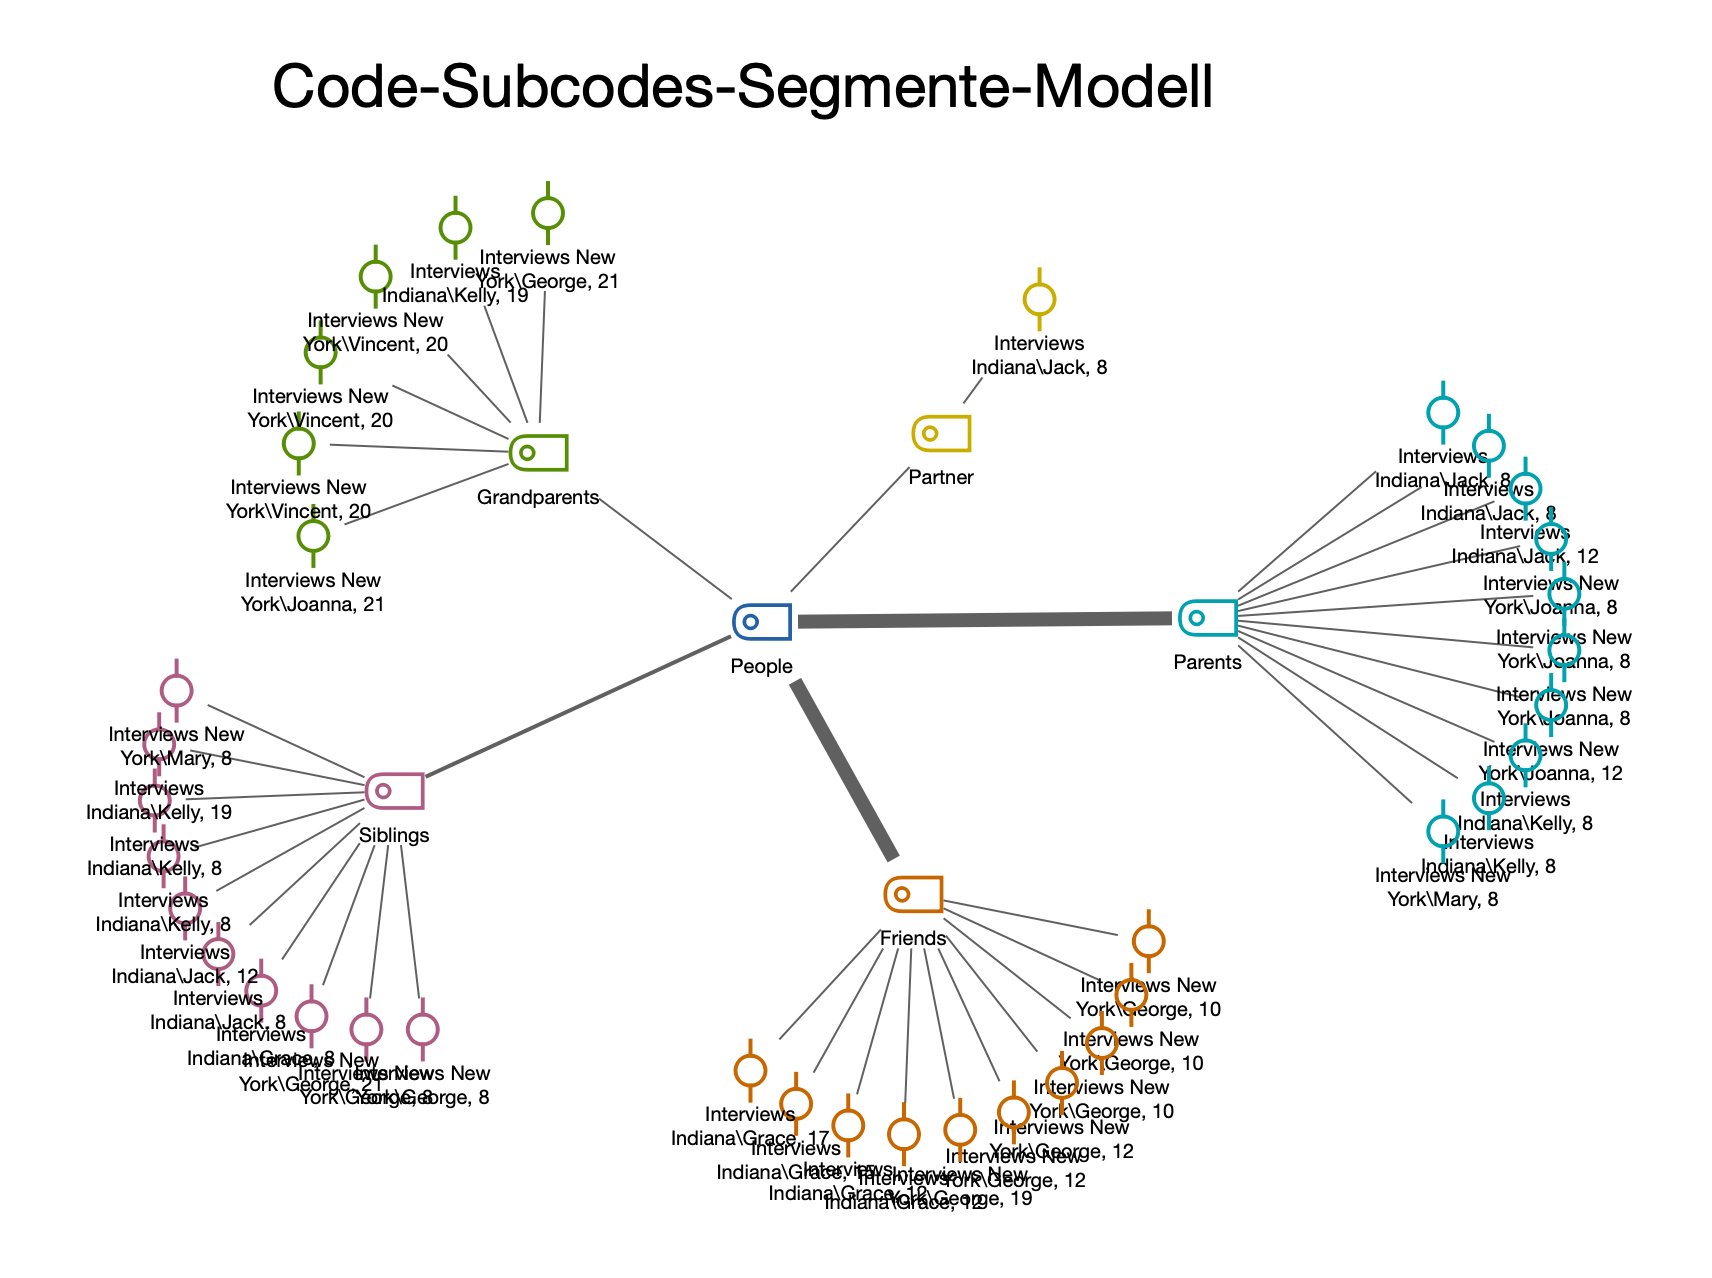 The Code-Subcodes-Segments model